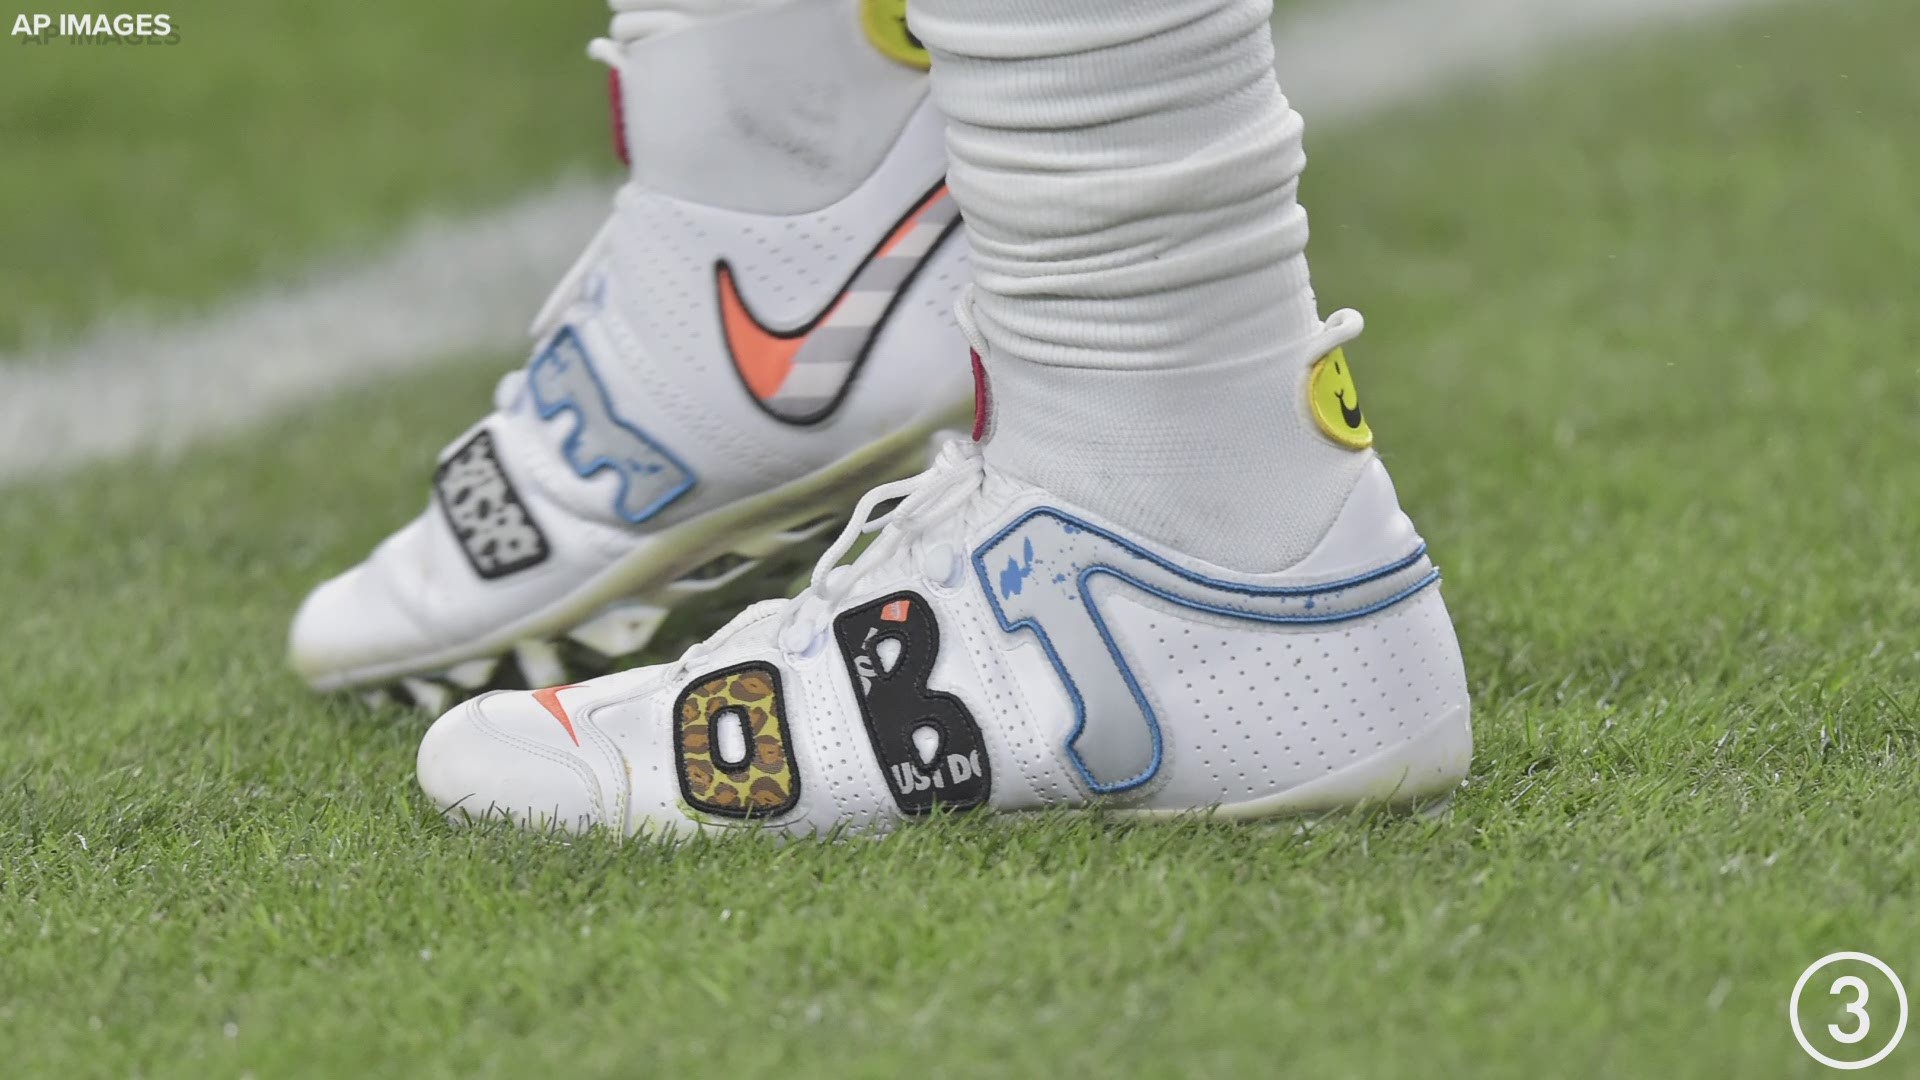 Odell Beckham Jr.'s new Nike cleats 